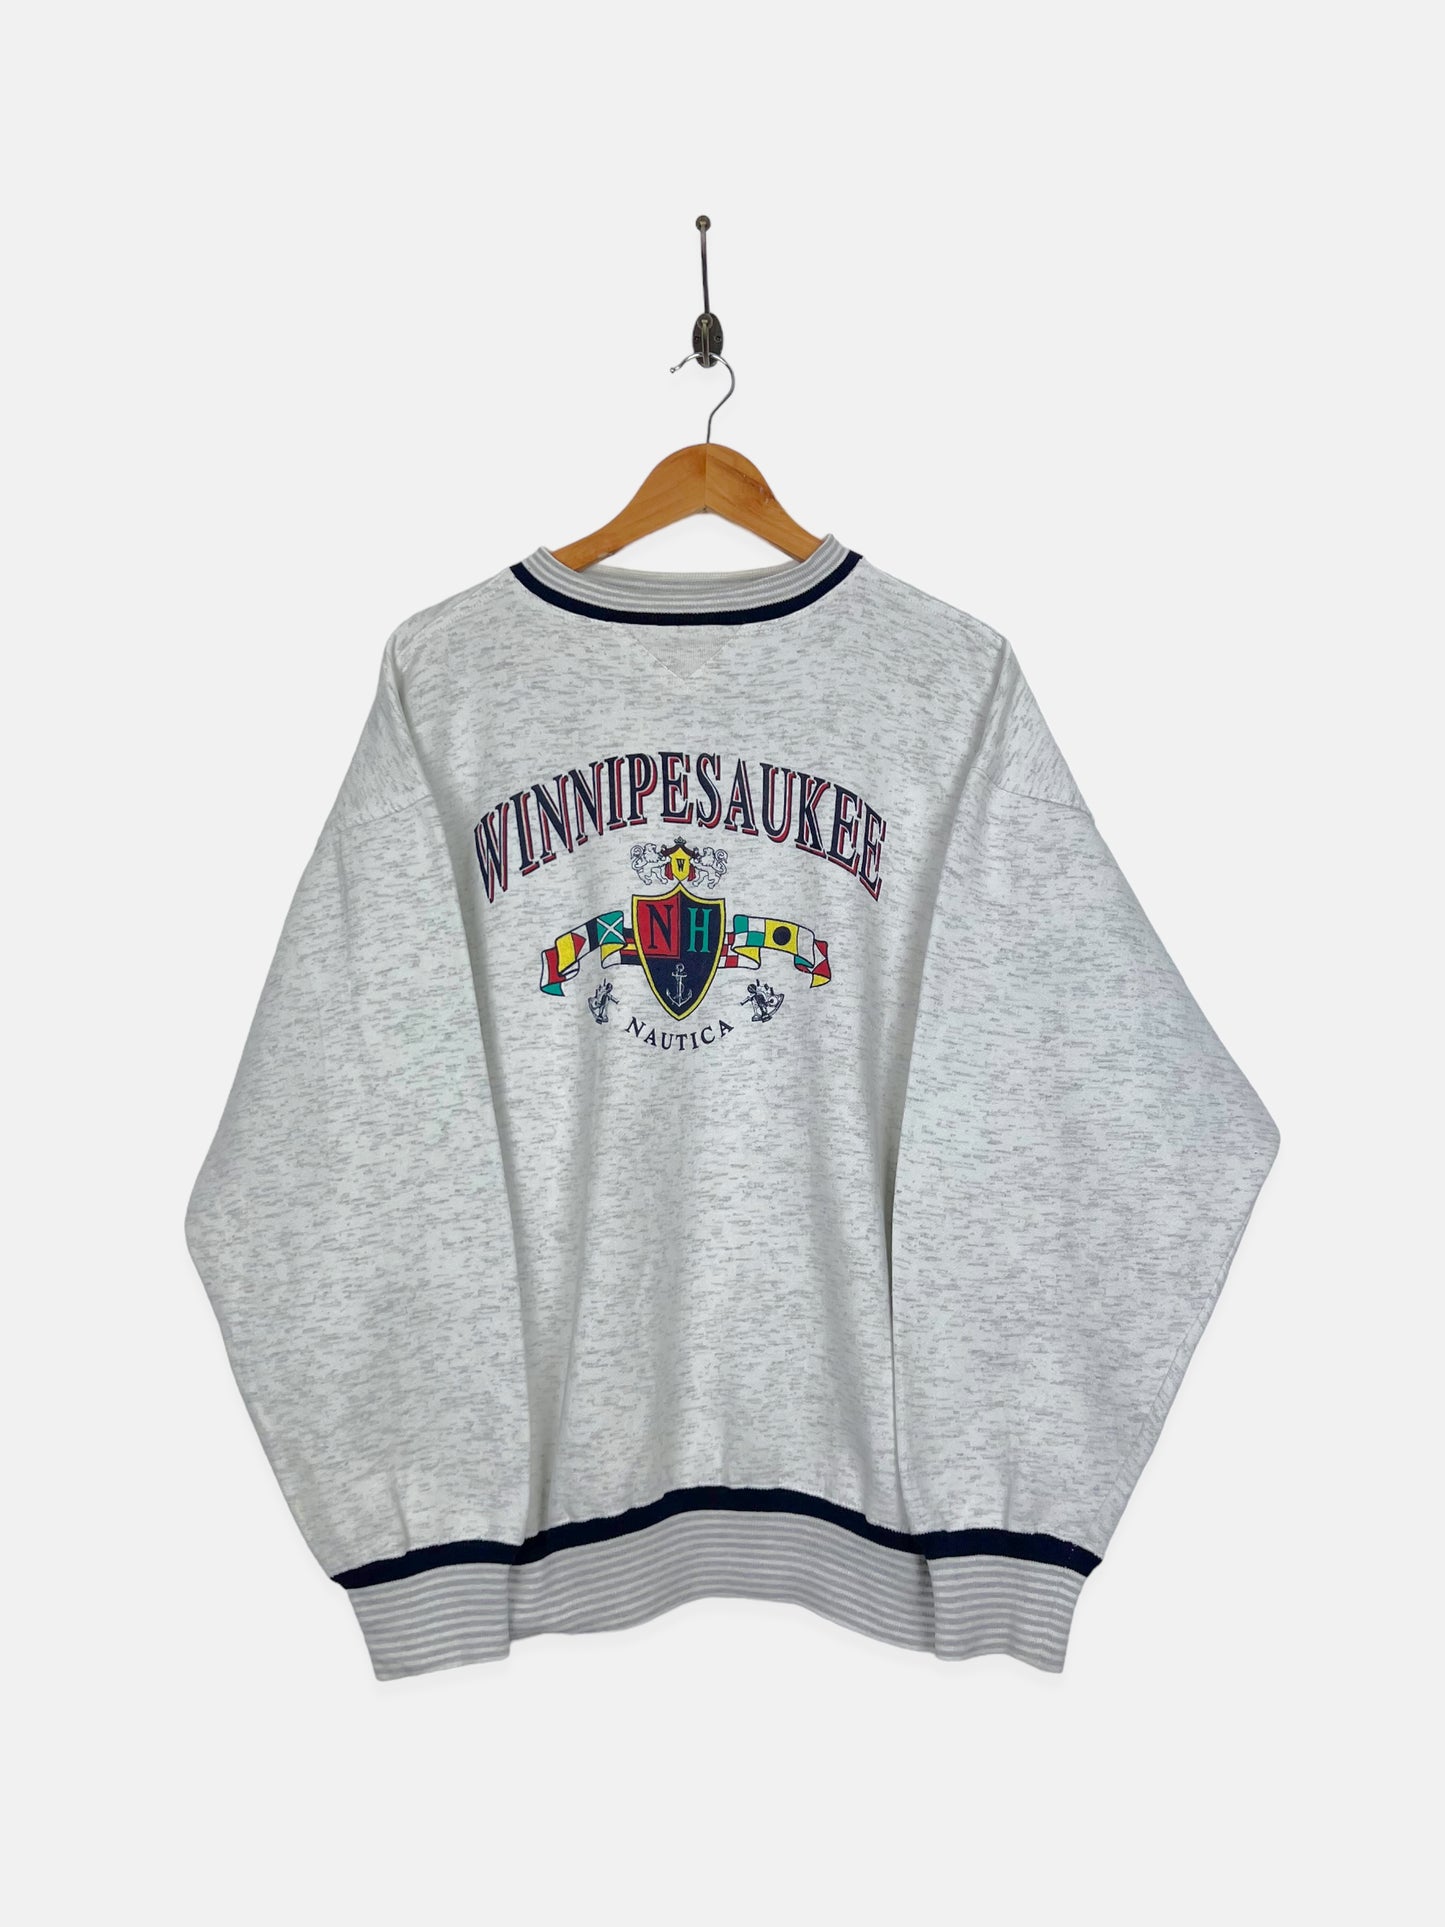 90's Nautica Winnipesaukee Vintage Sweatshirt Size XL